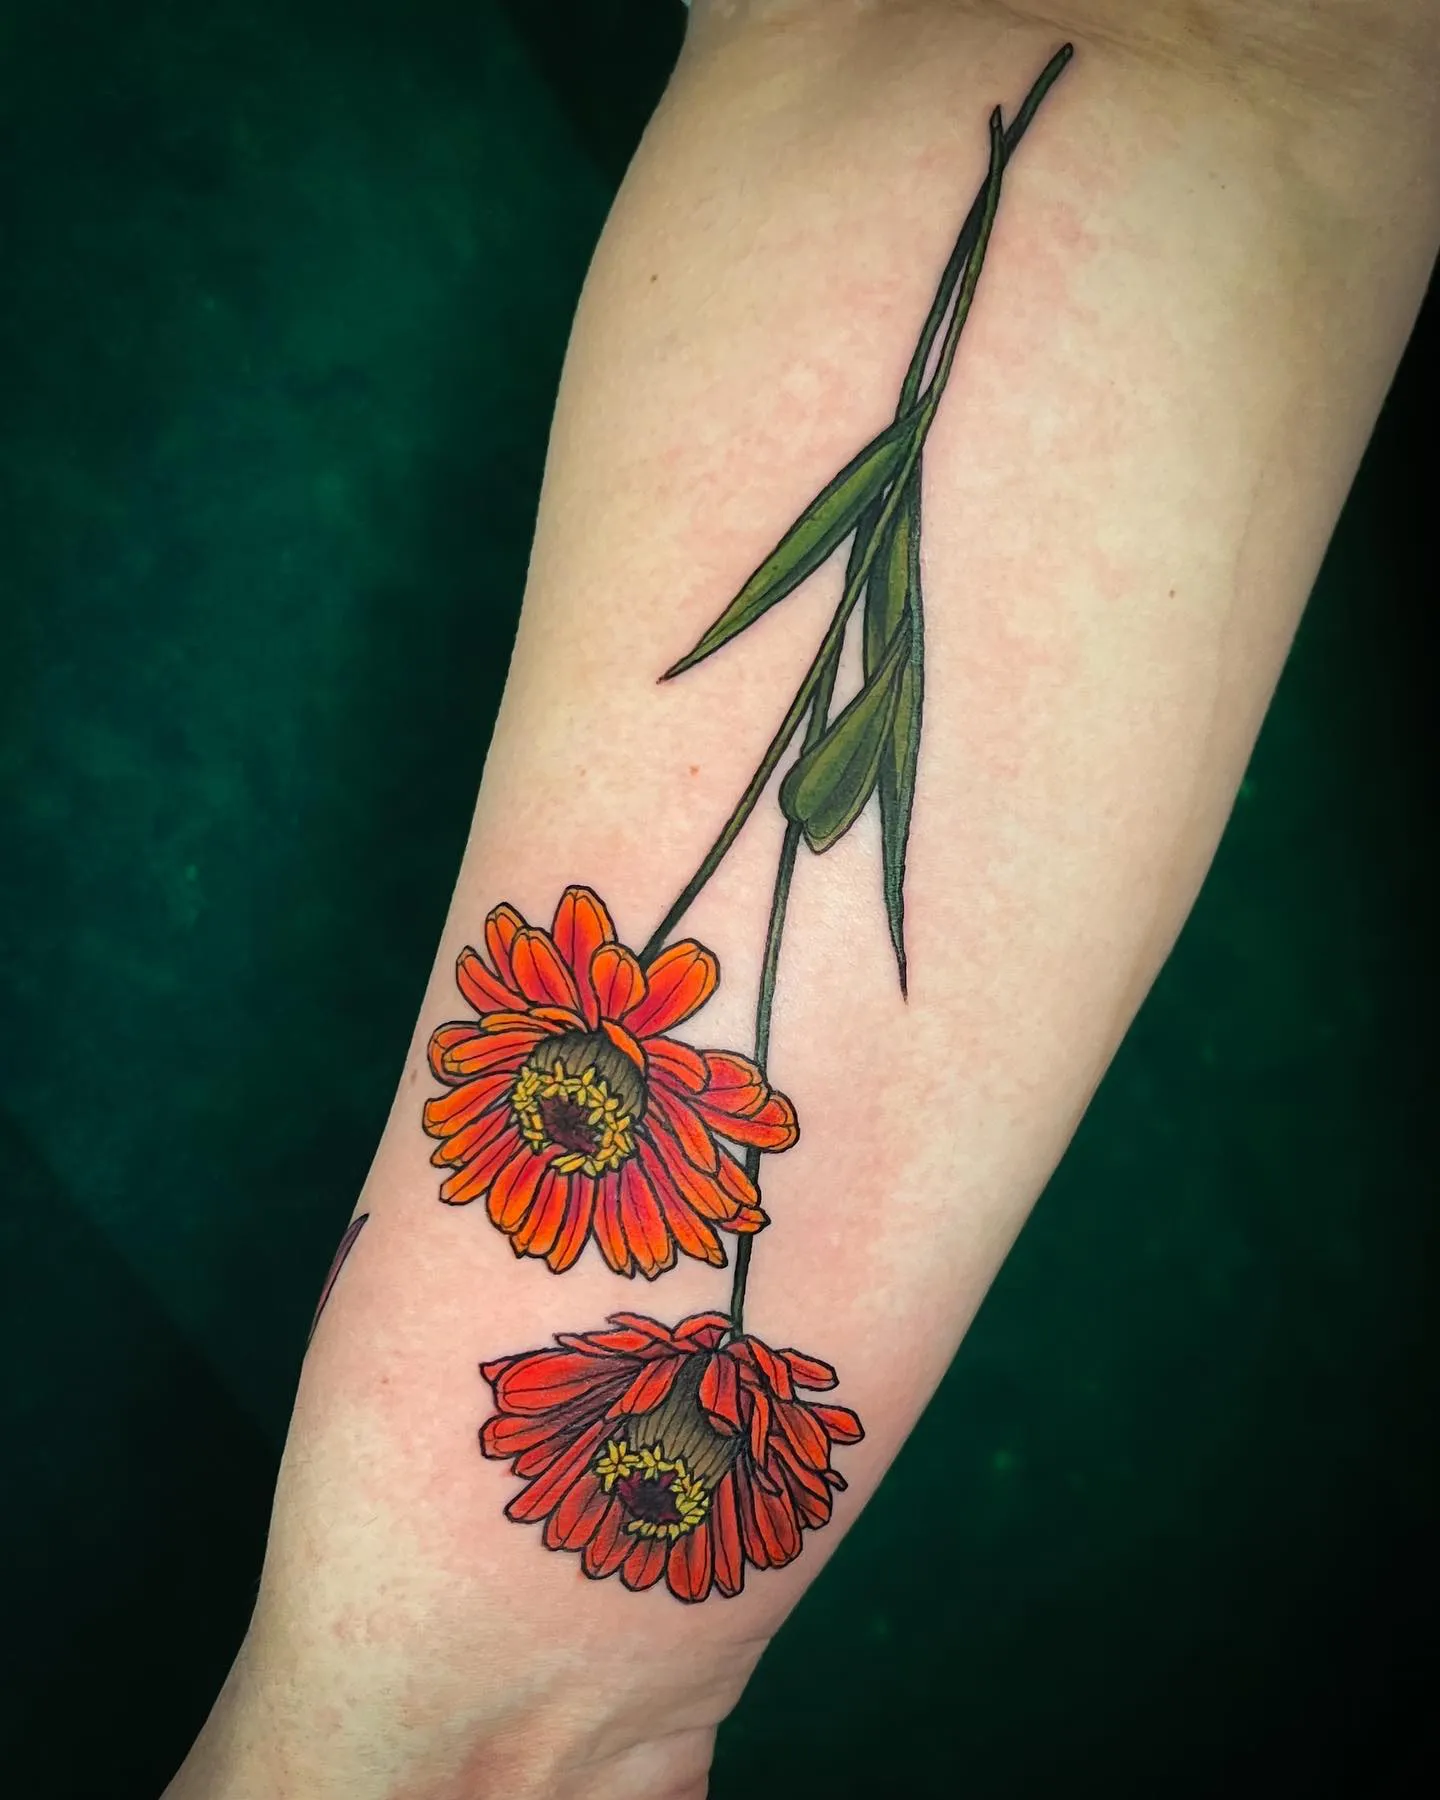 Fiery Zinnia Tattoo with Striking Colors